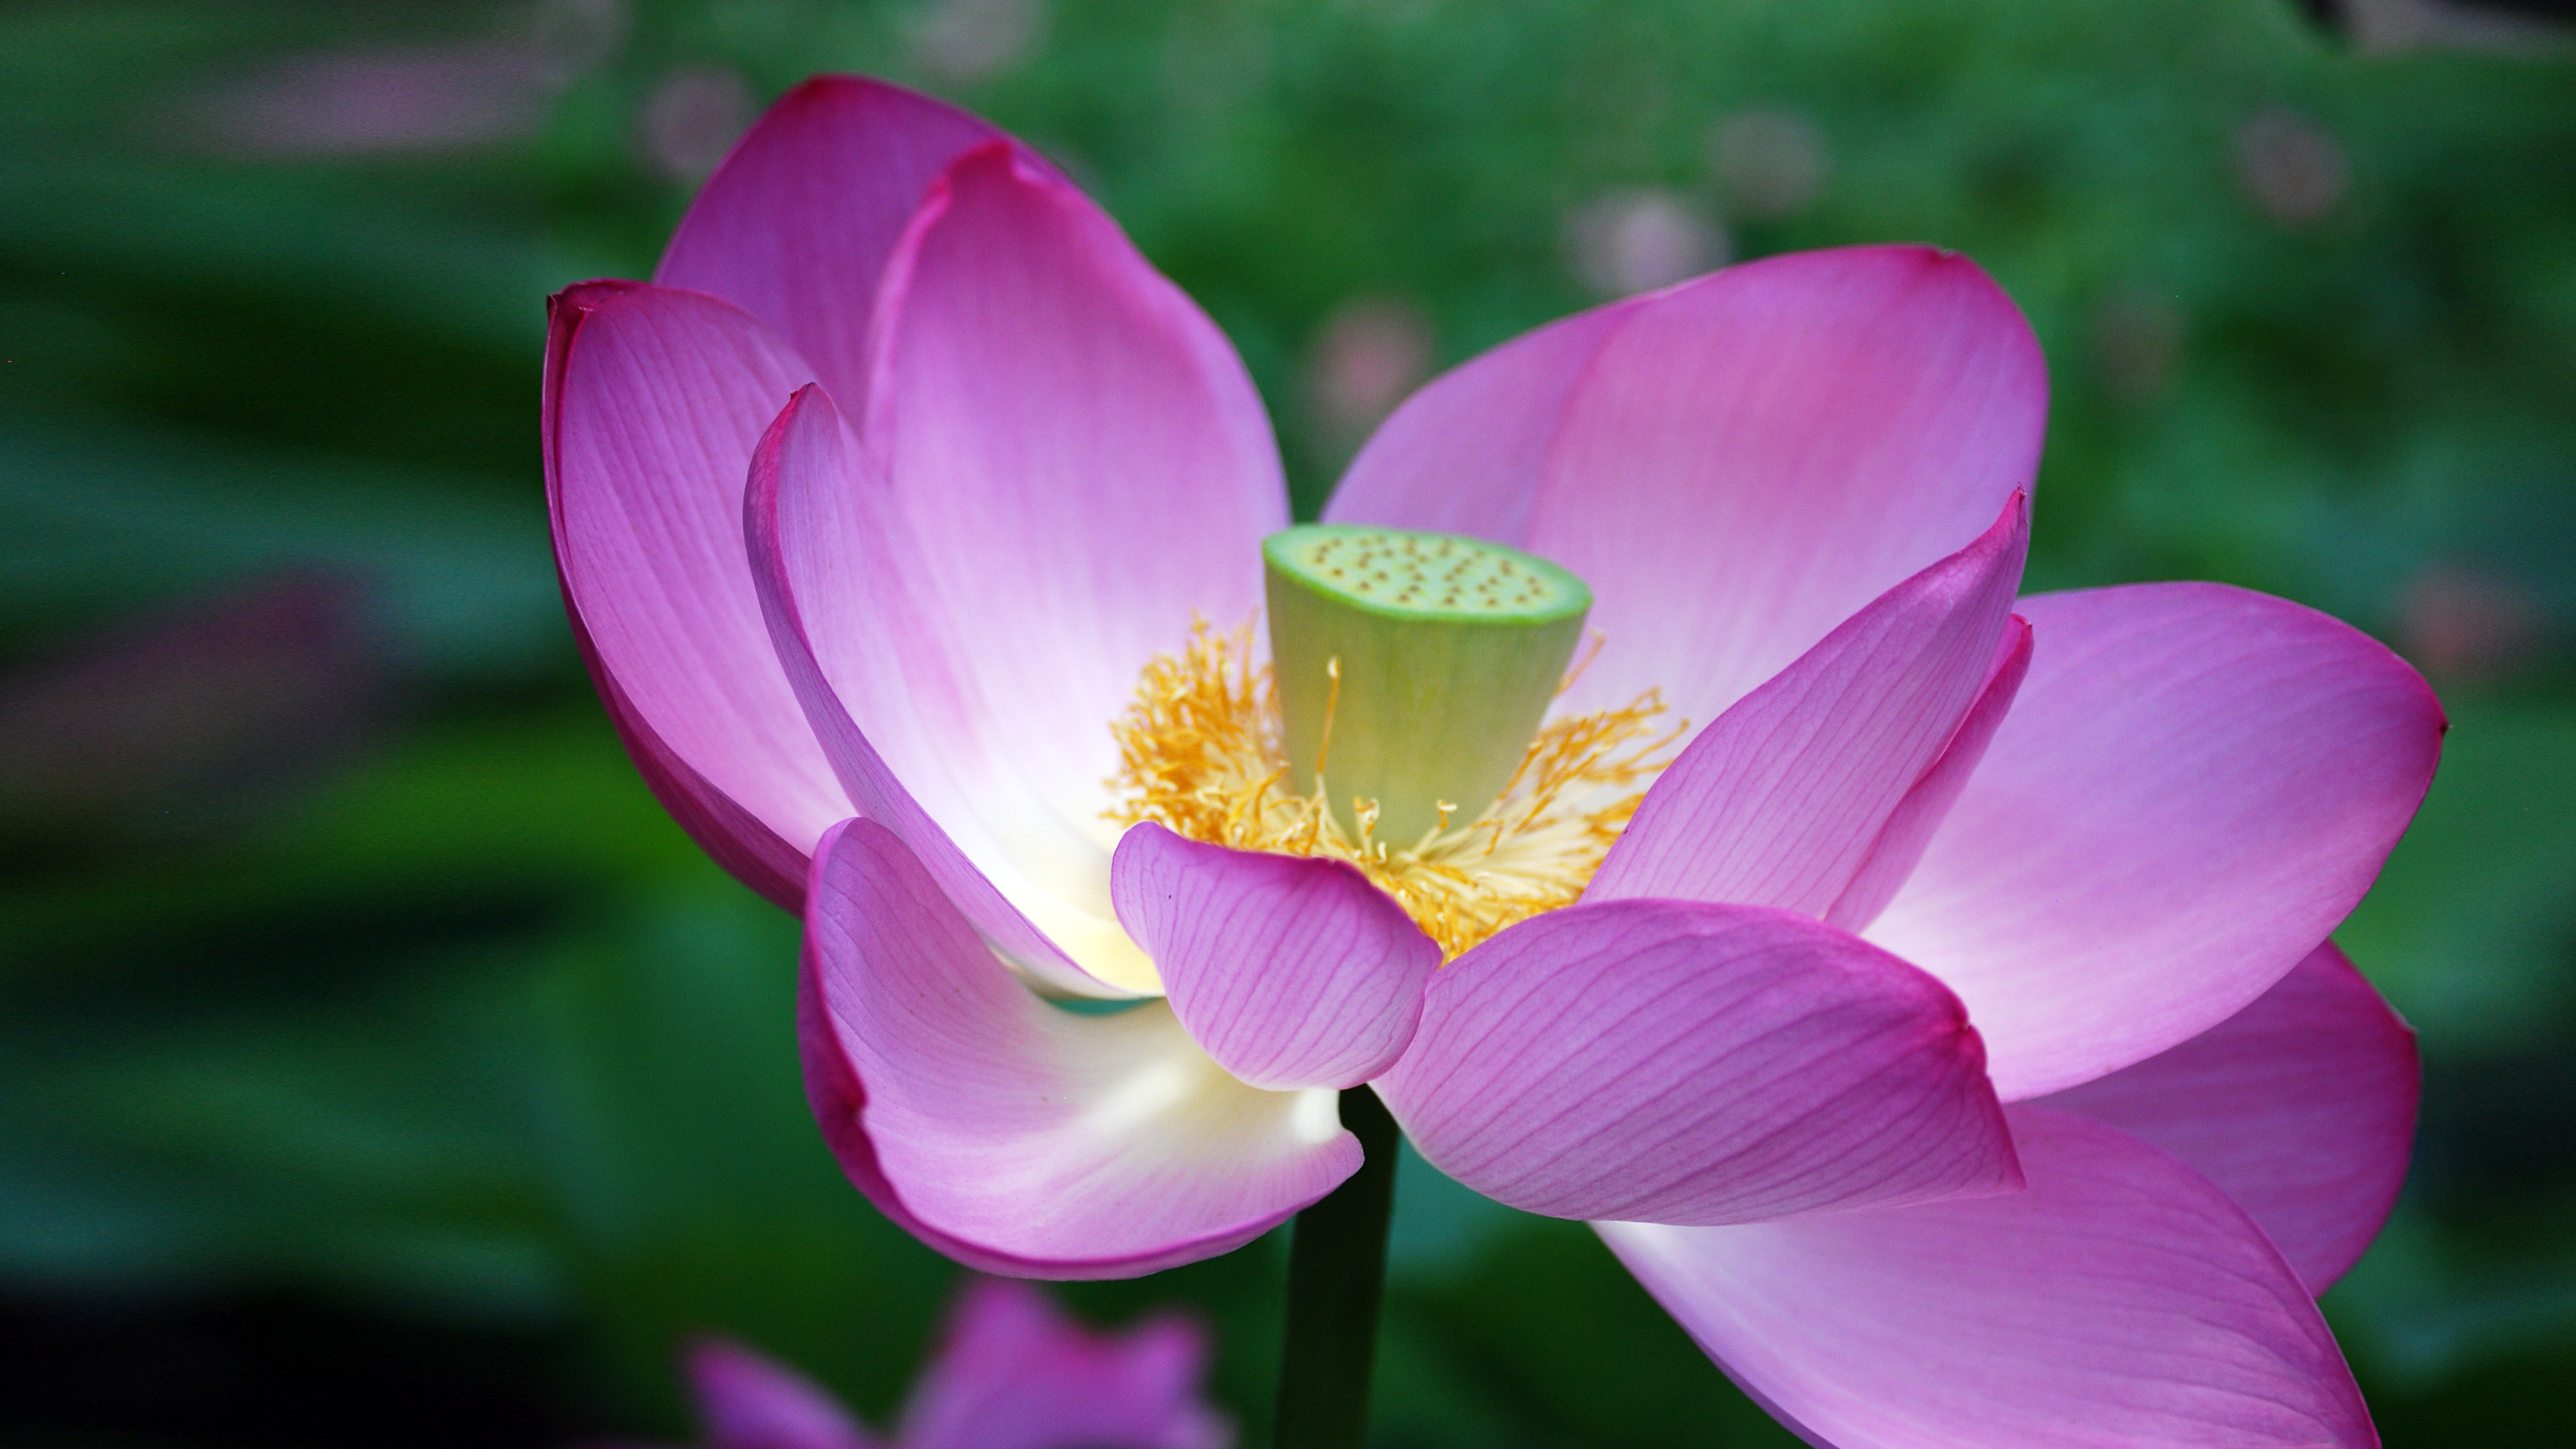 Ultra HD lotus flower, Intricate details, Close-up view, Stunning photography, 3840x2160 4K Desktop